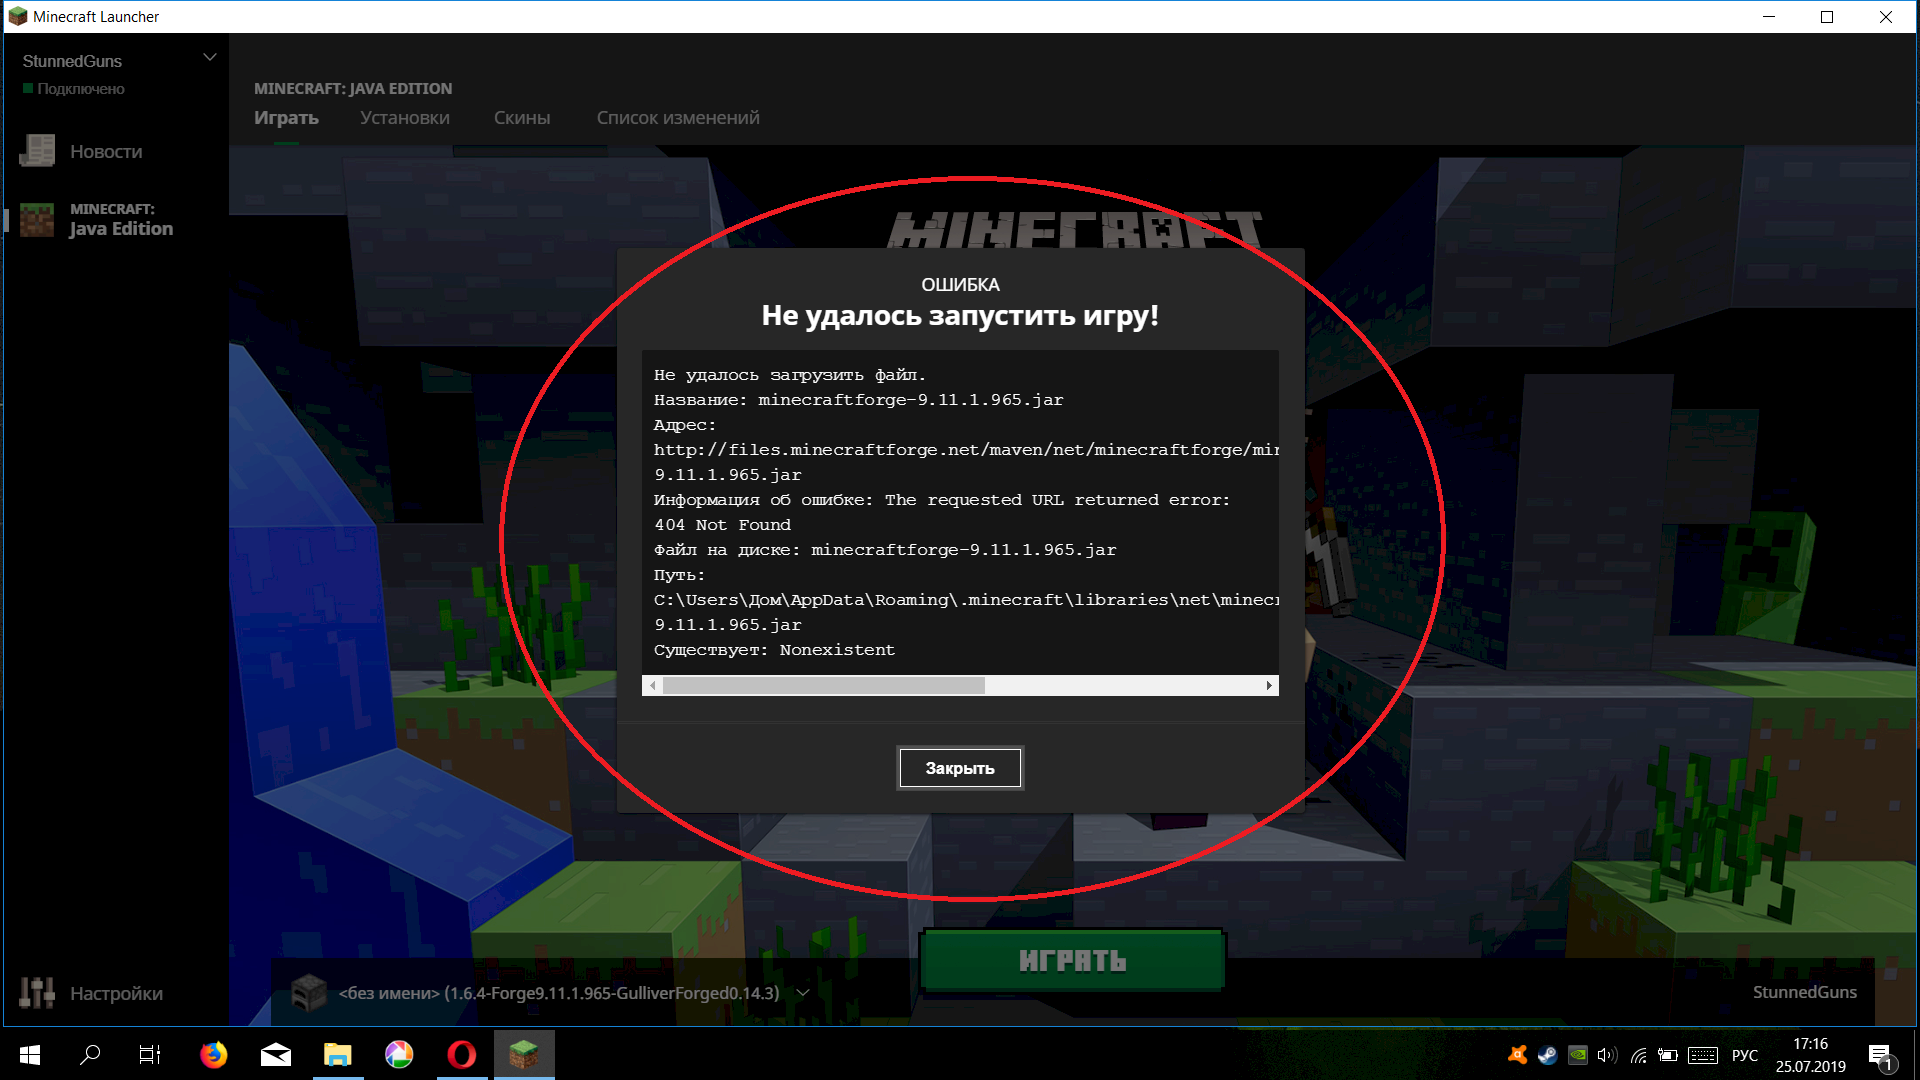 Ошибка при запуске мода Gulliver Mod 1.6.4 С Forge В Minecraft